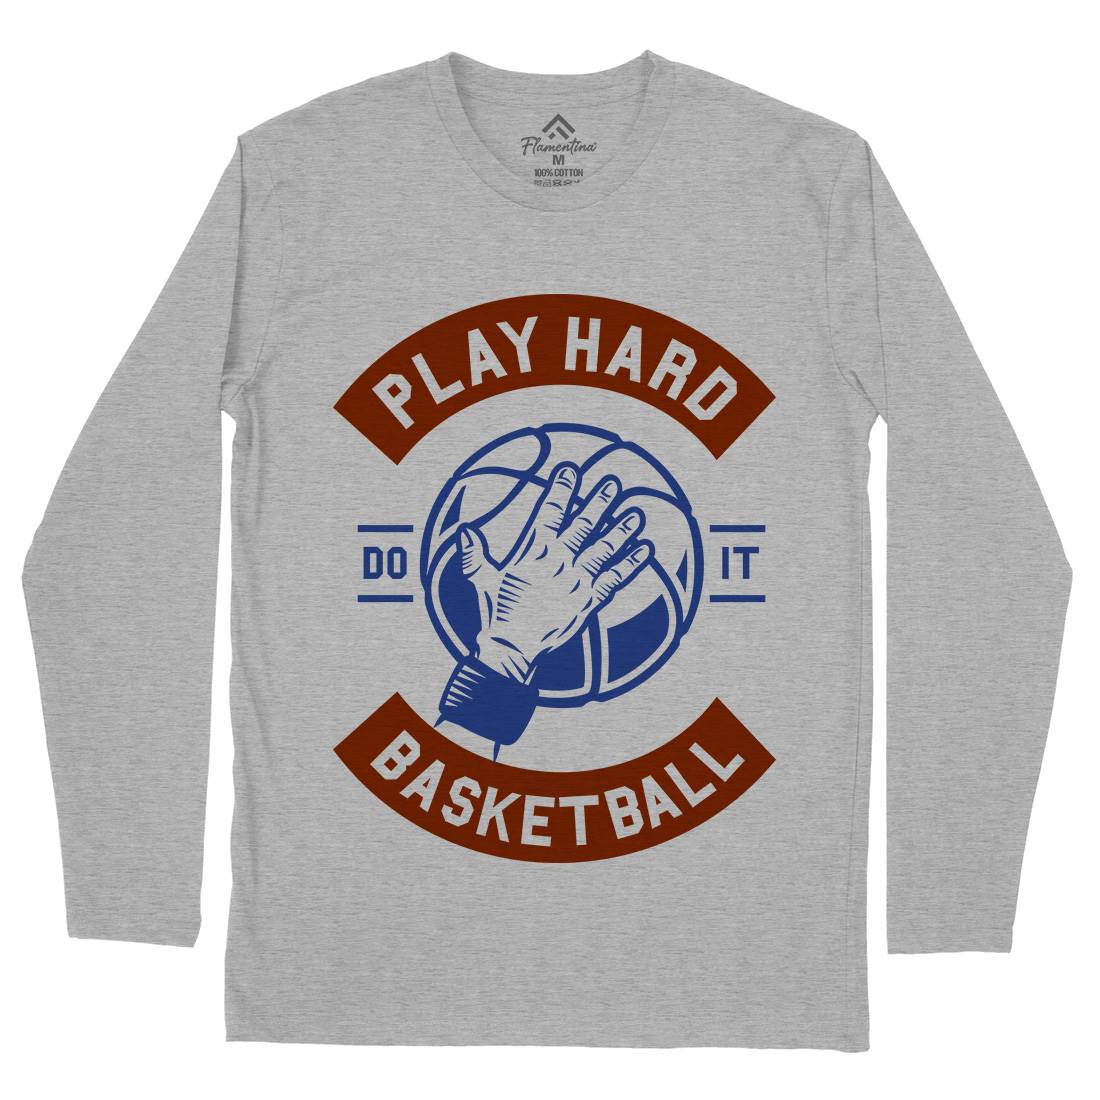 Play Hard Basketball Mens Long Sleeve T-Shirt Sport A261